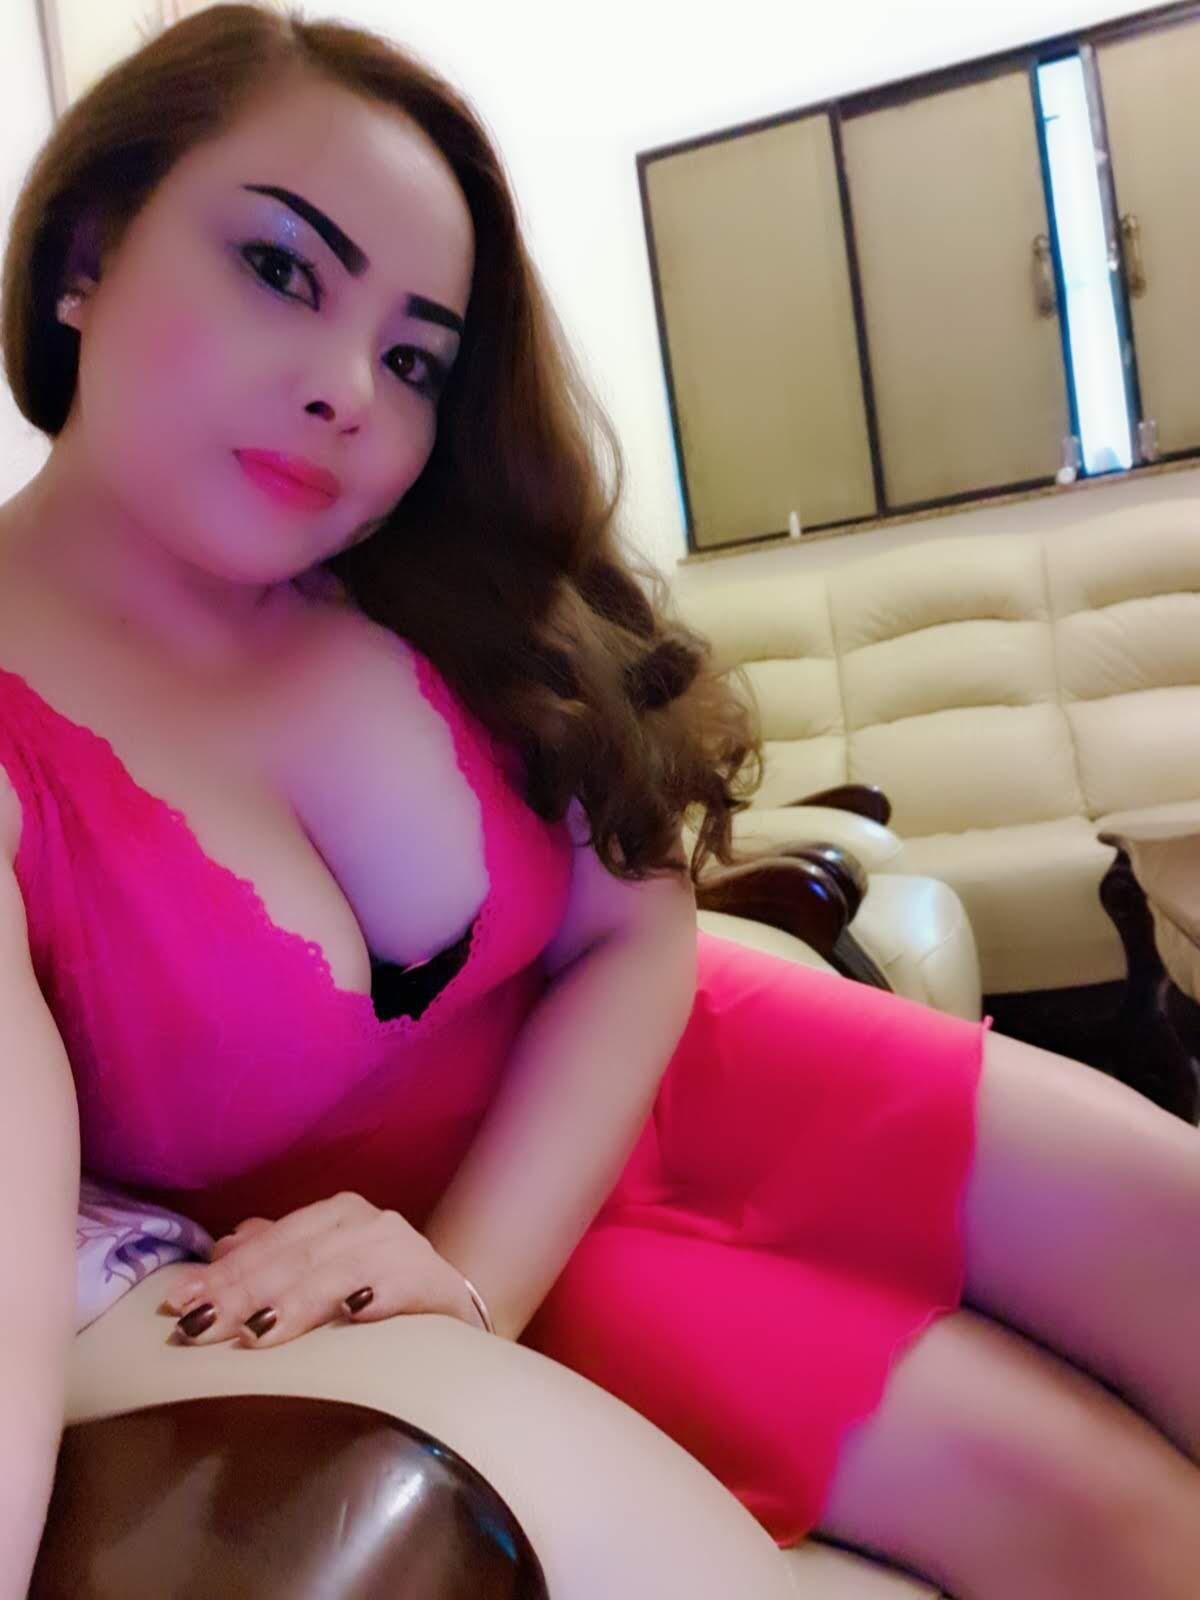 Kuwait College Girl Tits - RUBY BIG BOOBS, Kuwaiti escort in Kuwait